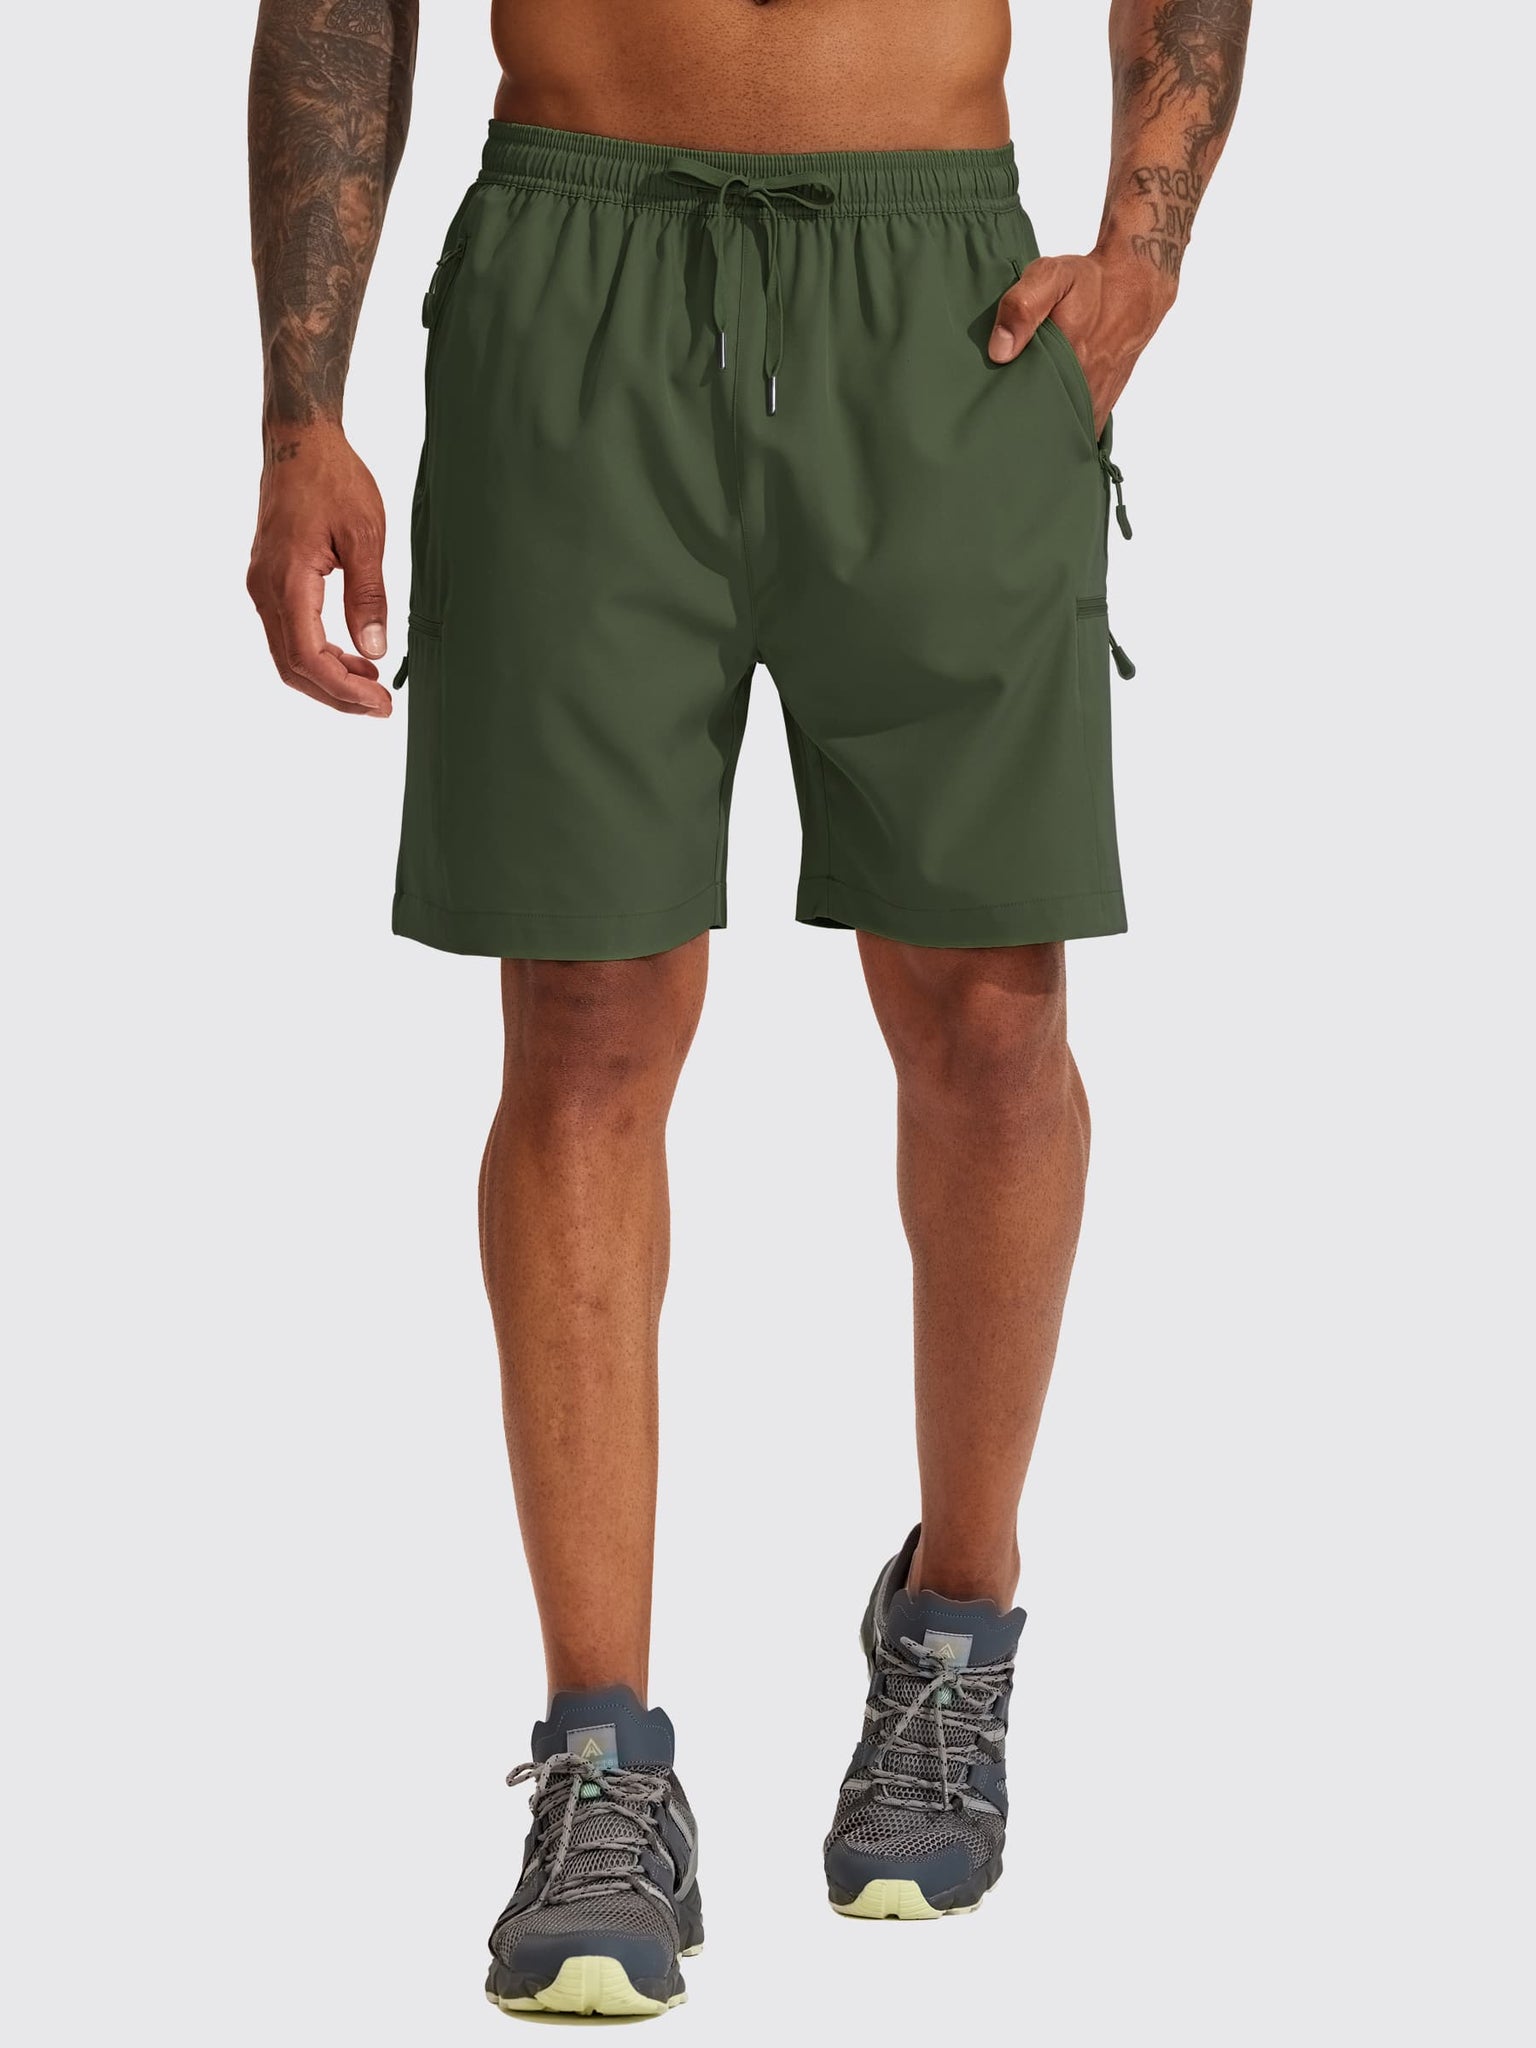 Men's Lightweight Cargo Shorts 7 Inch_ArmyGreen1